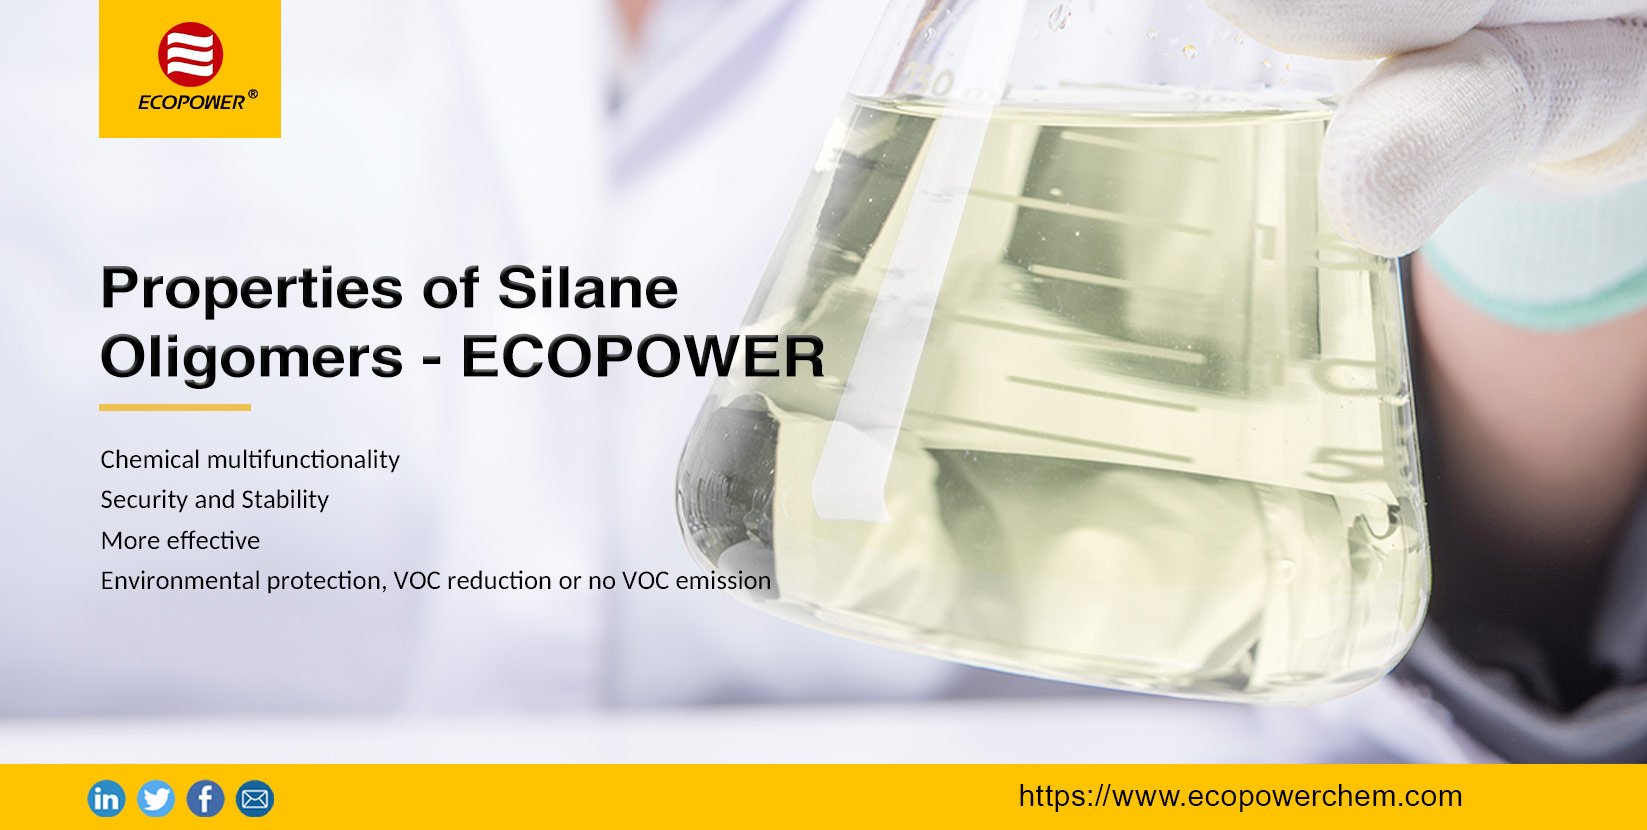 Properties of Silane Oligomers - ECOPOWER